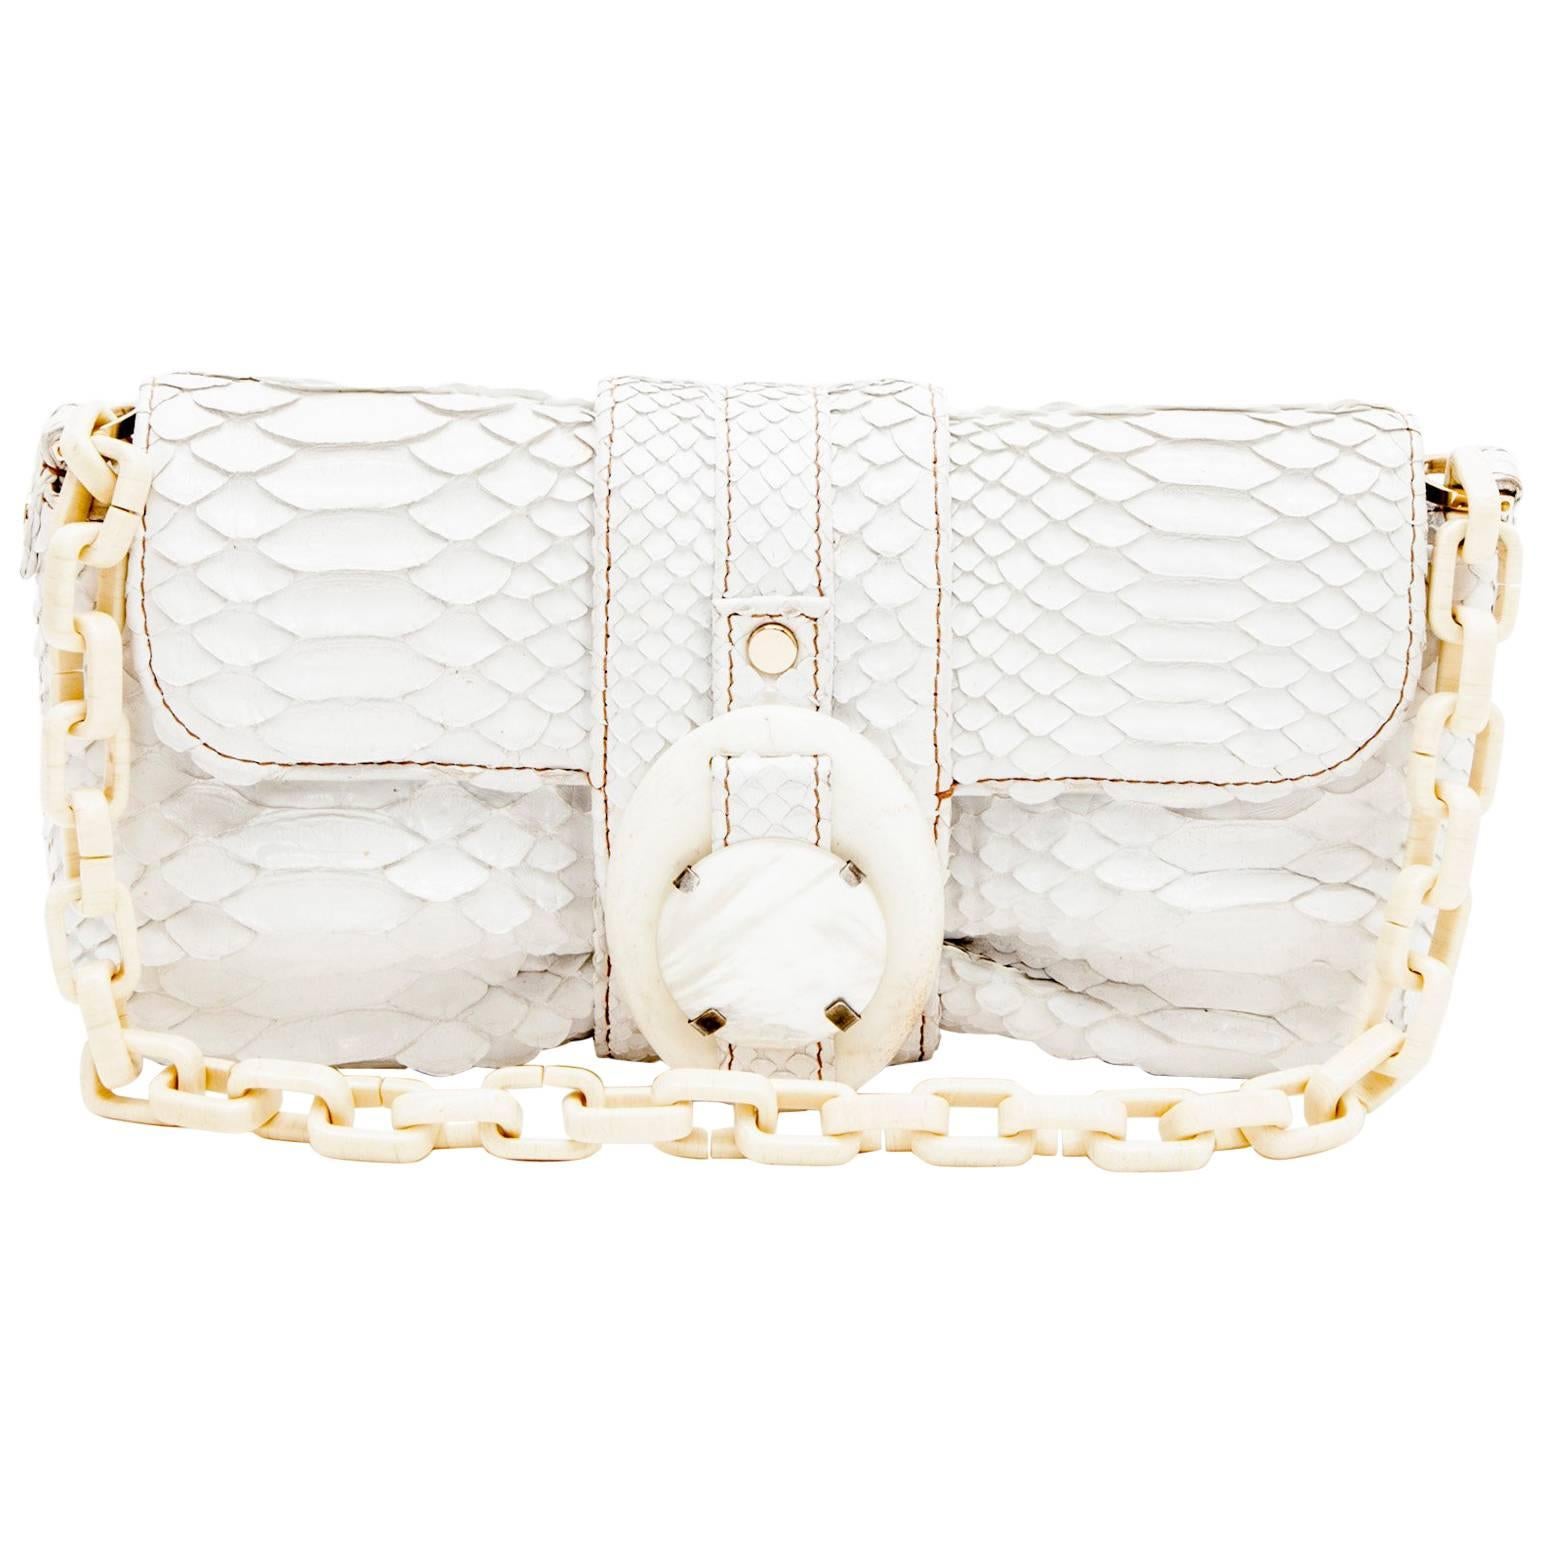 LANVIN Baguette Bag in White Python Leather